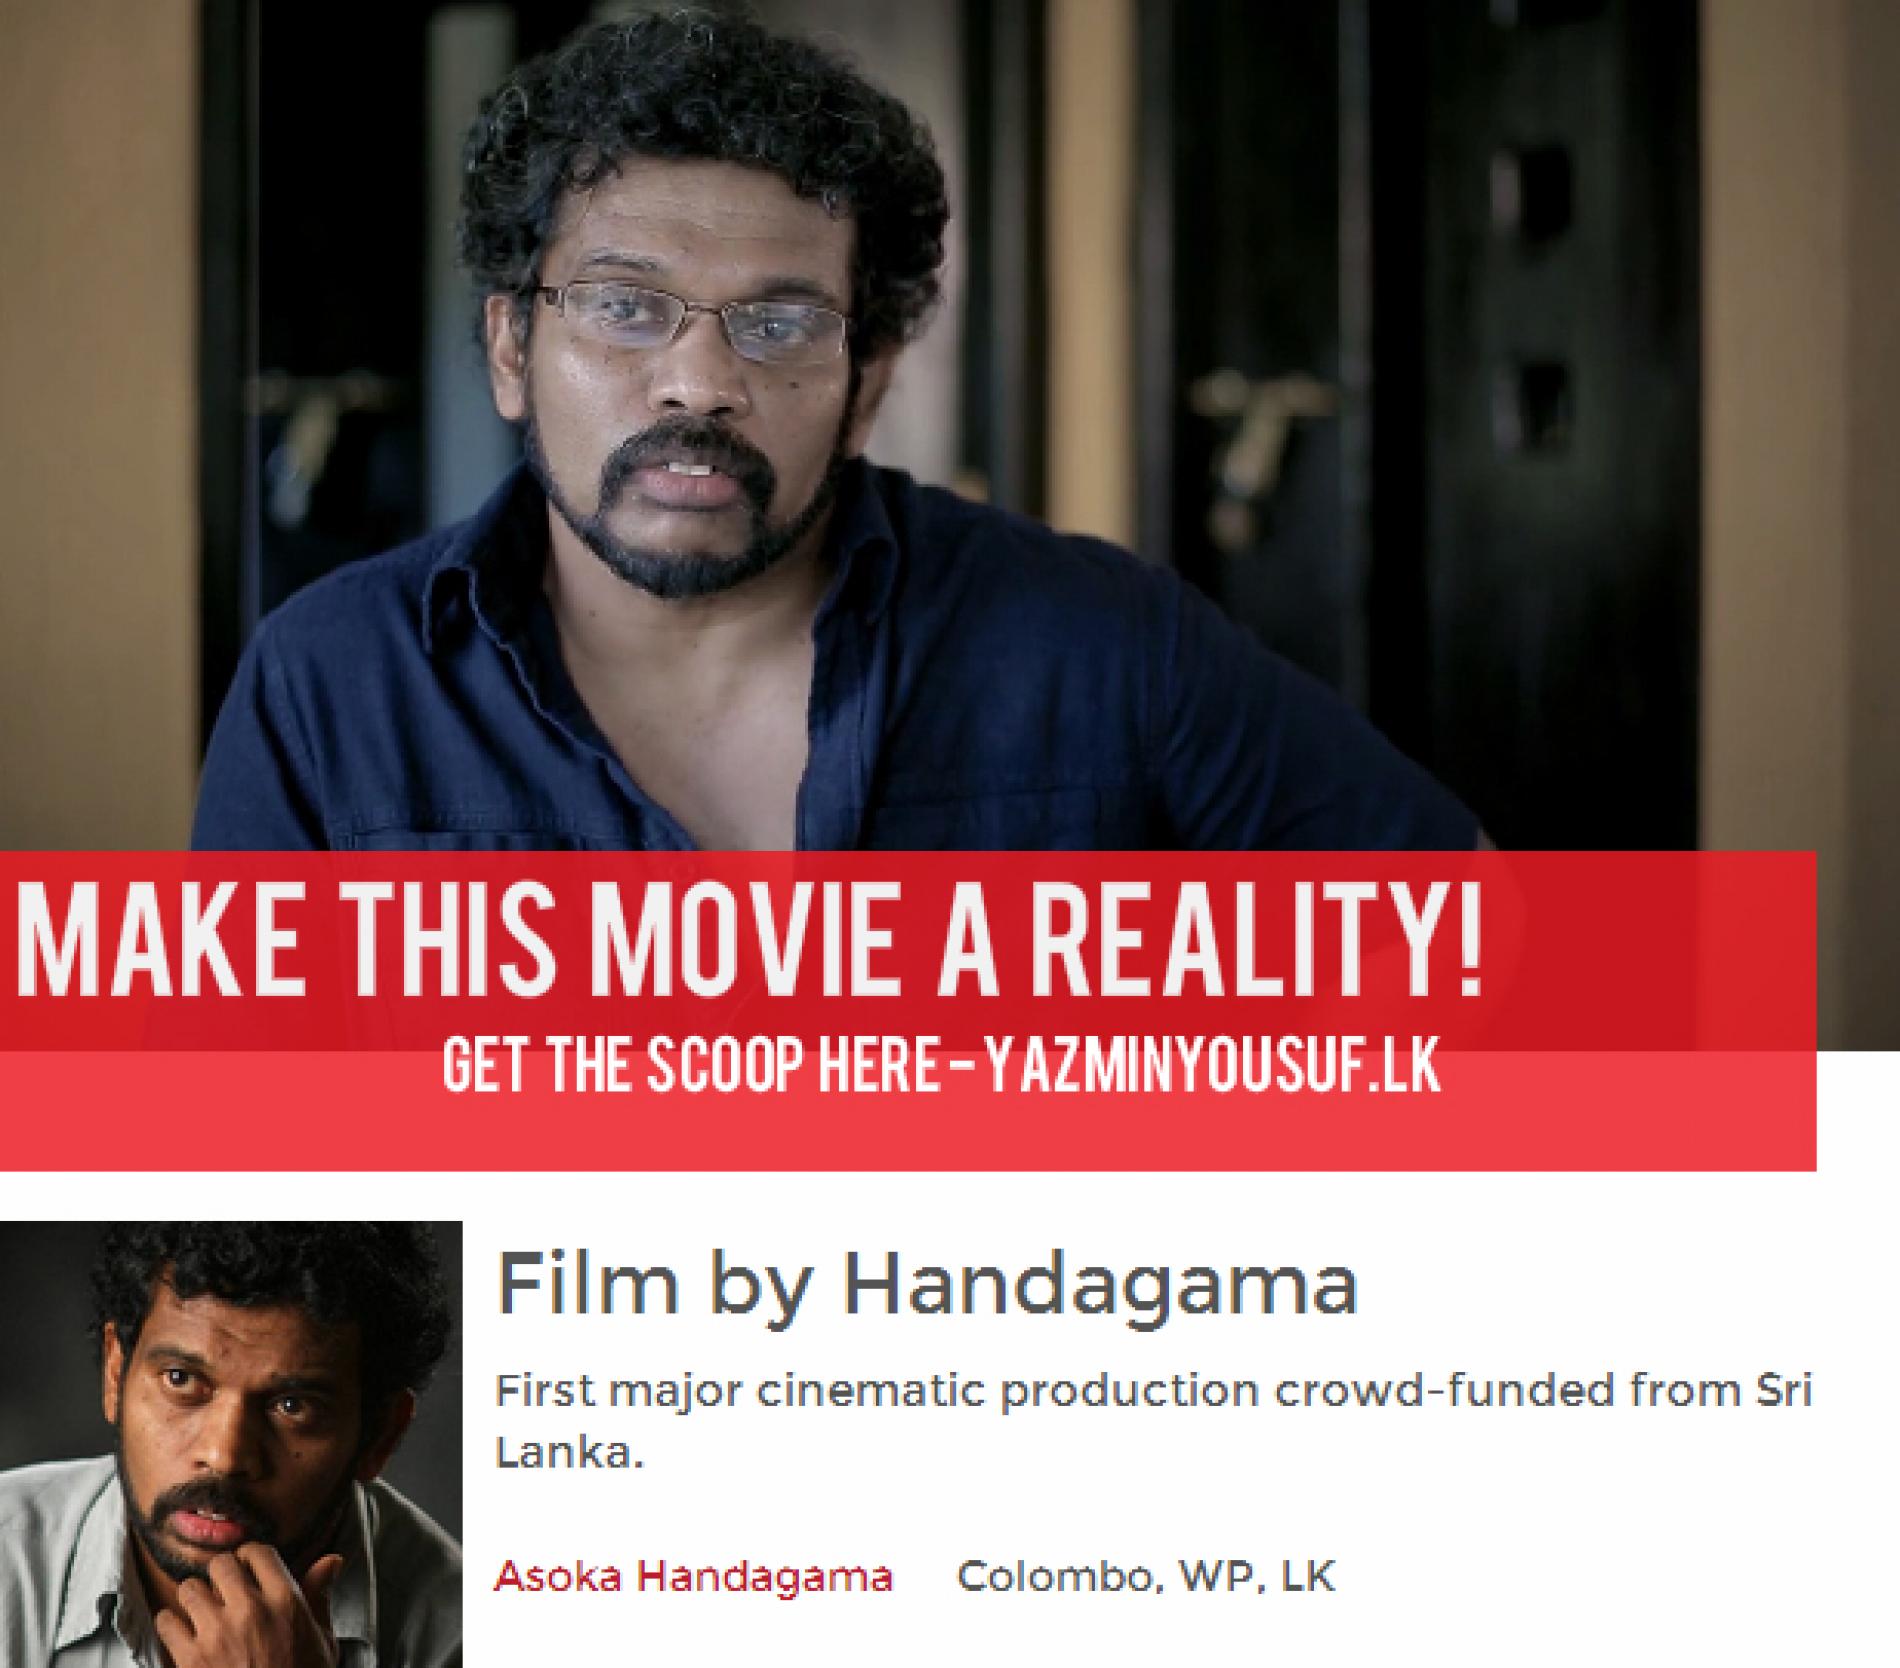 Film by Handagama